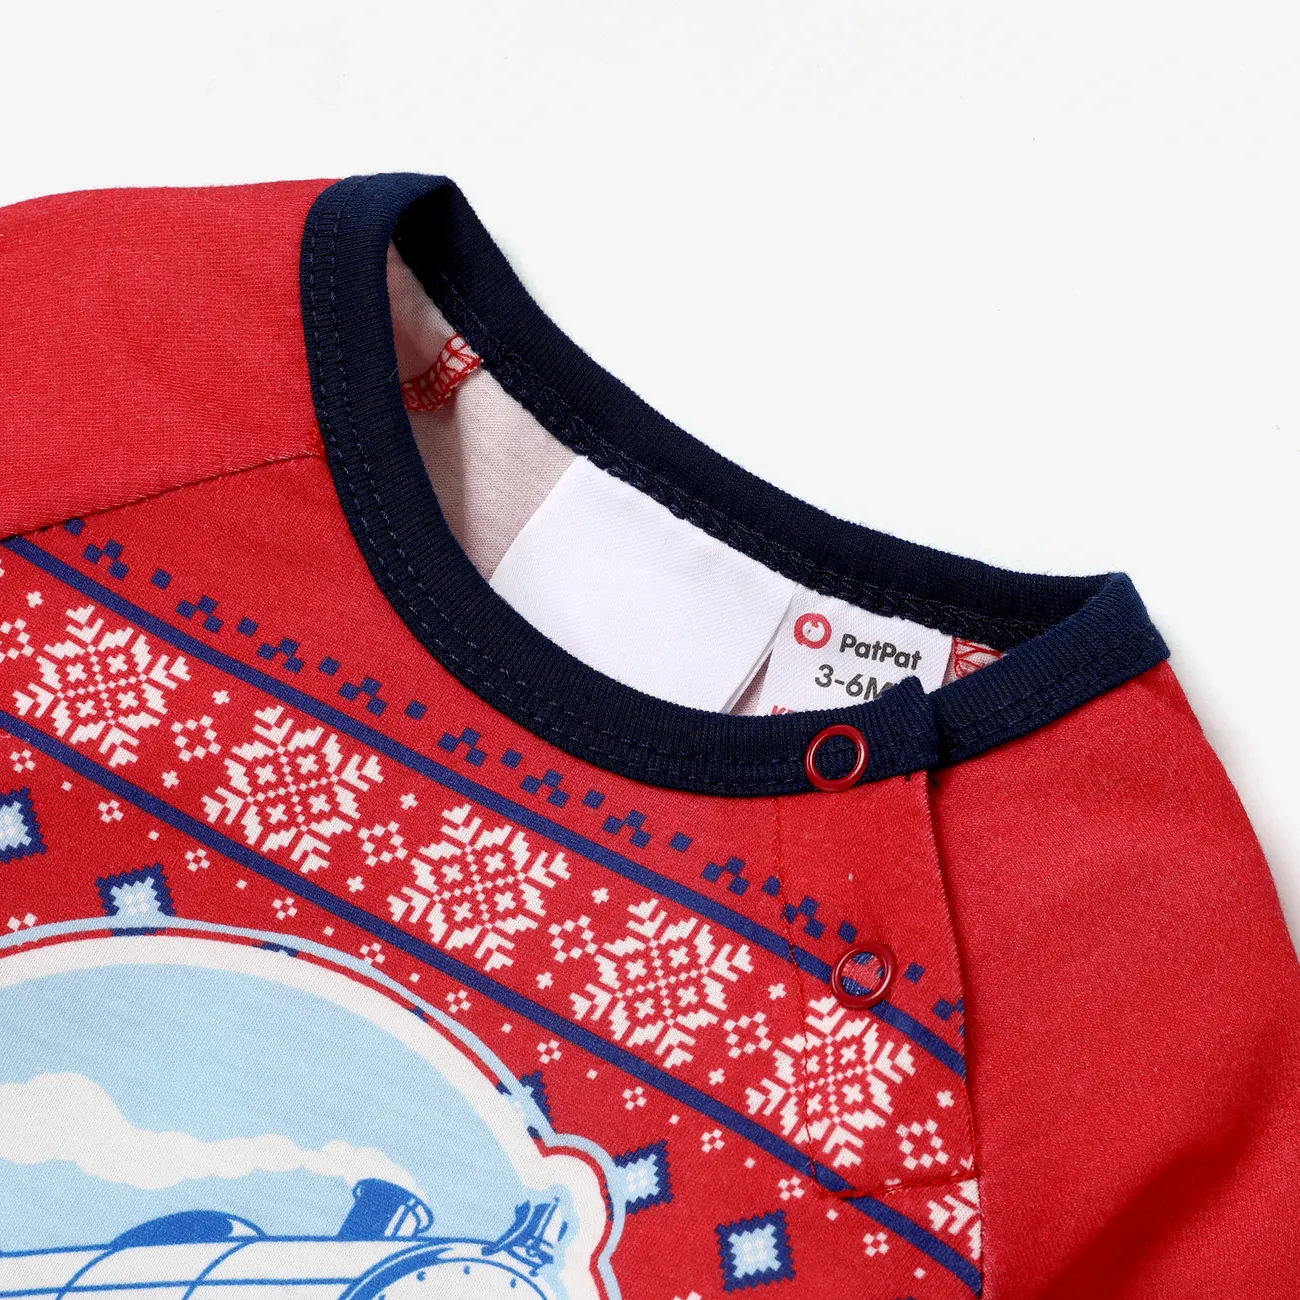 The Polar Express Weihnachten Familien-Looks Langärmelig Familien-Outfits Pyjamas (Flame Resistant) Mehrfarbig big image 1